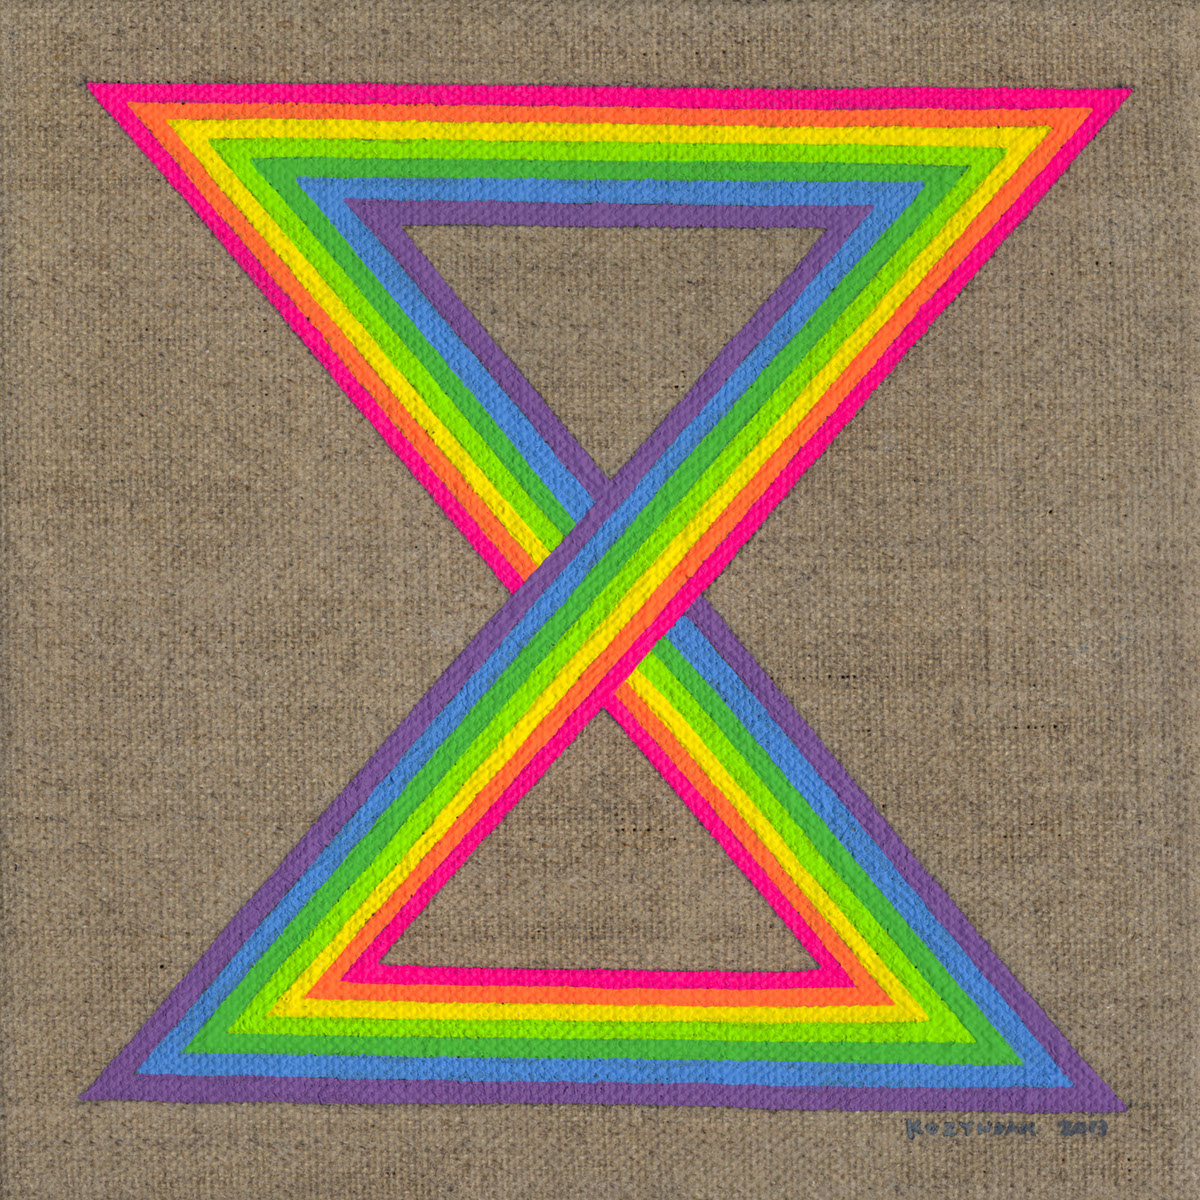 rainbow alien language design symbol pictograph light spectrum